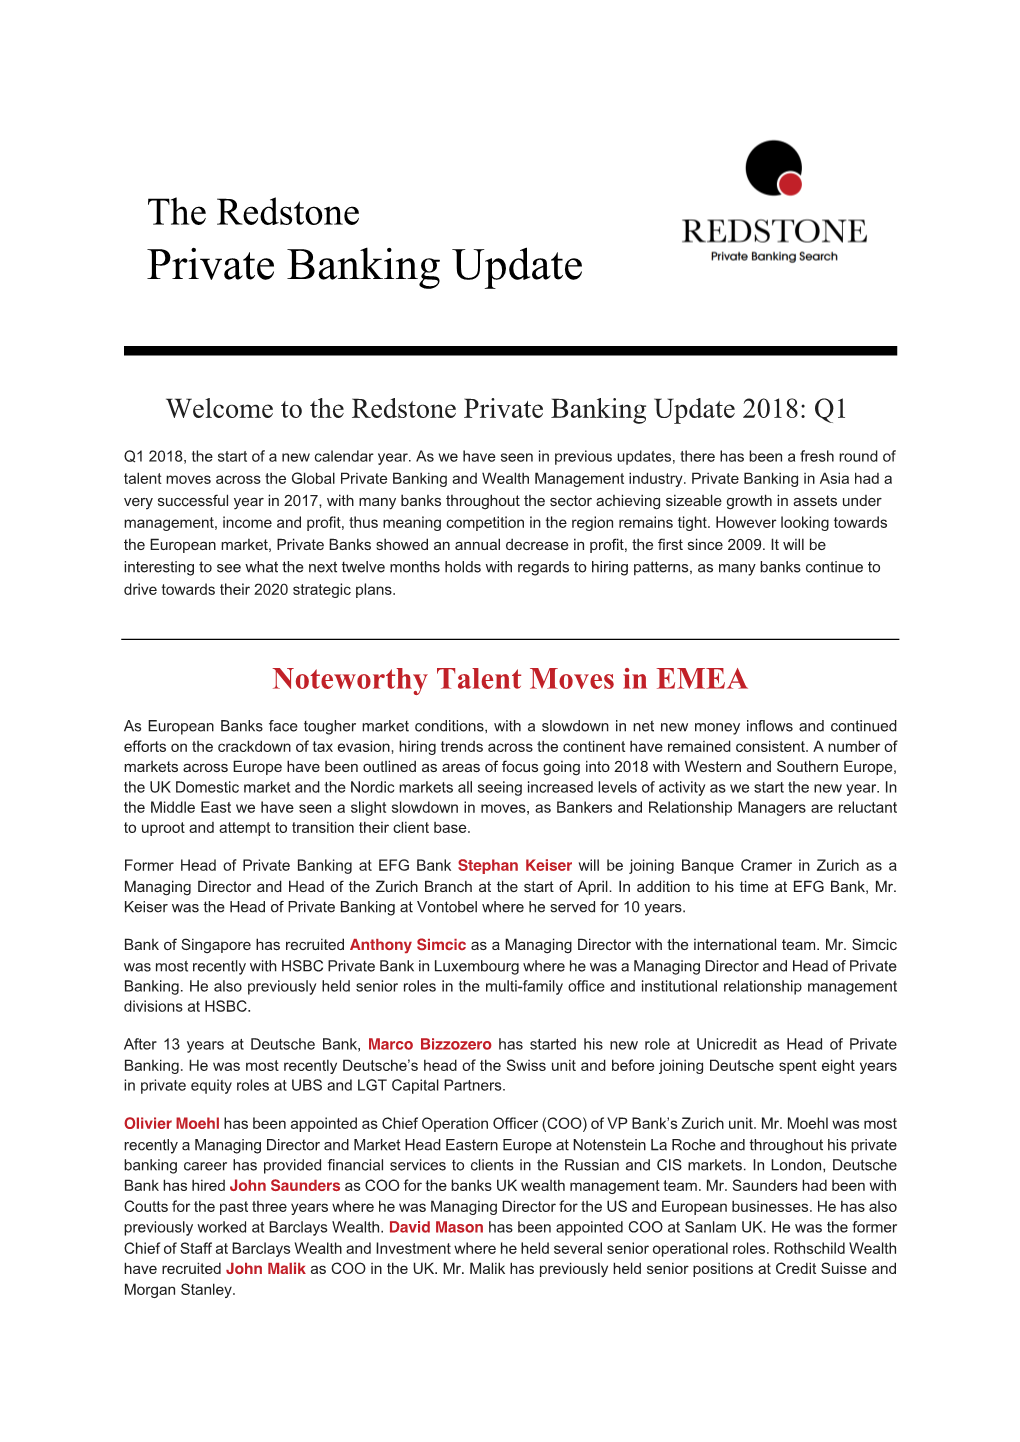 Redstone Private Banking Update Q1 2018